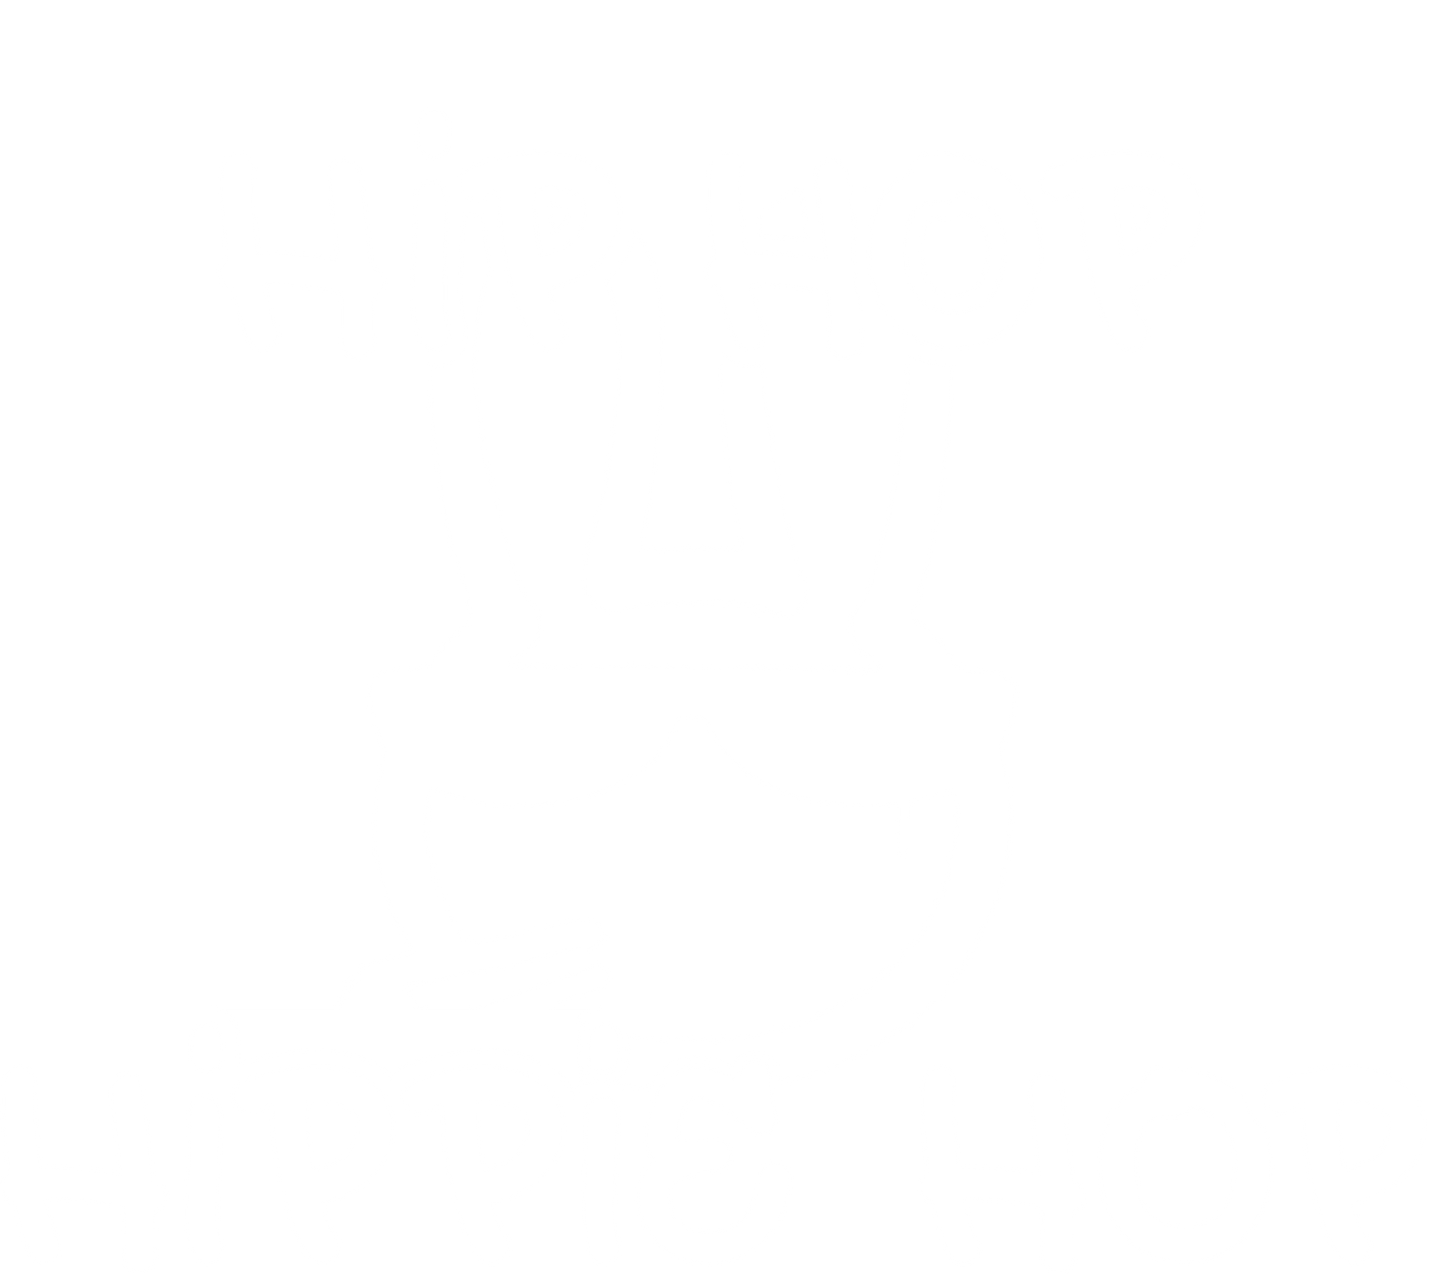 HIPPIE HOP